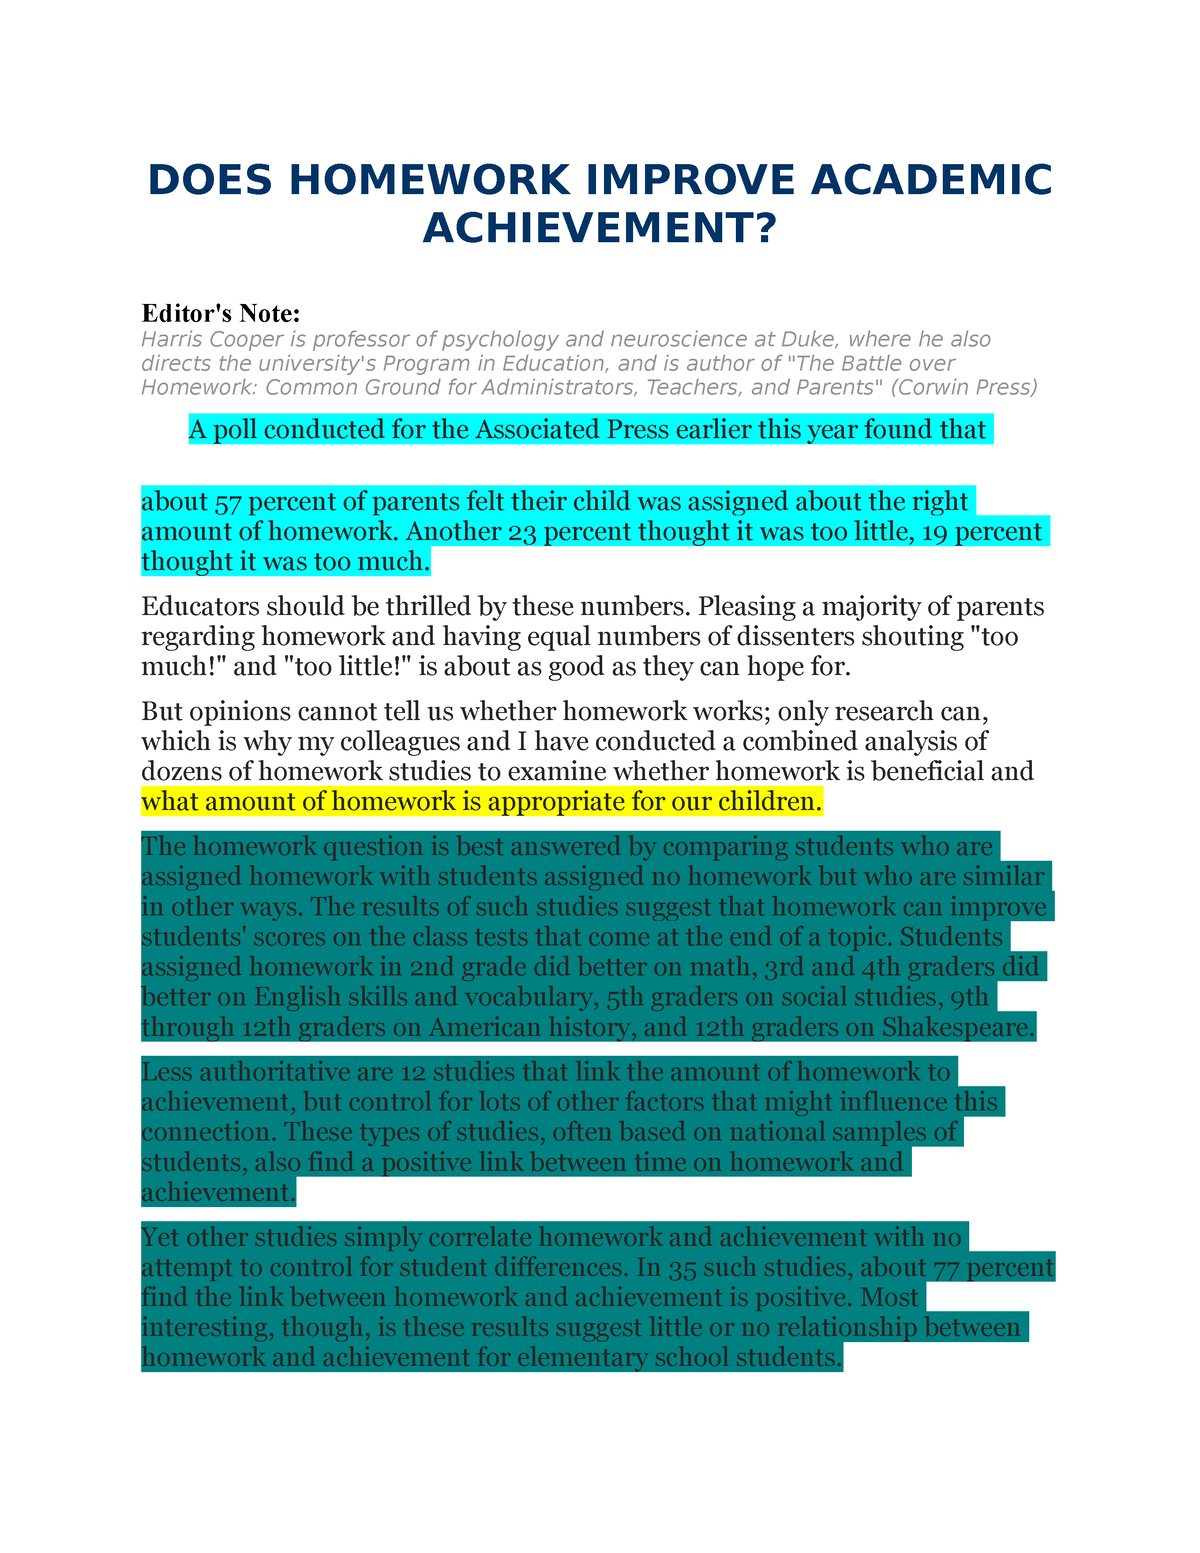 does homework improve academic achievement pdf